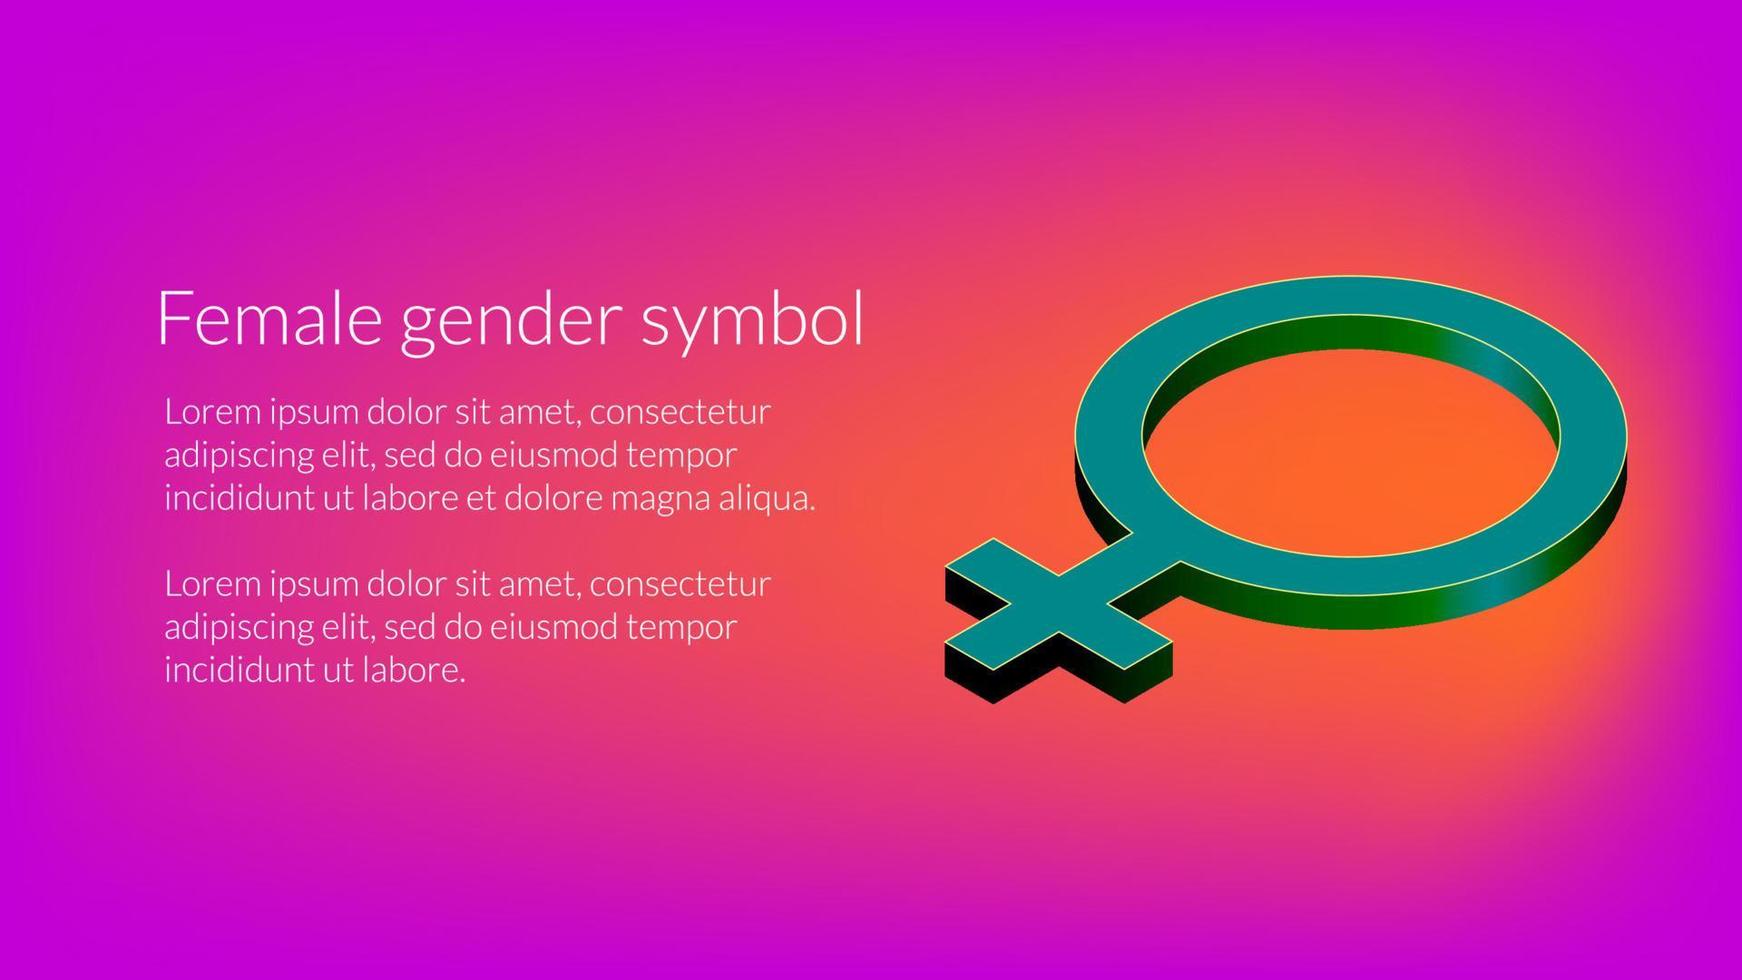 signo de género femenino isométrico con texto de ejemplo sobre fondo rosa. símbolo femenino para pancarta. ilustración vectorial vector